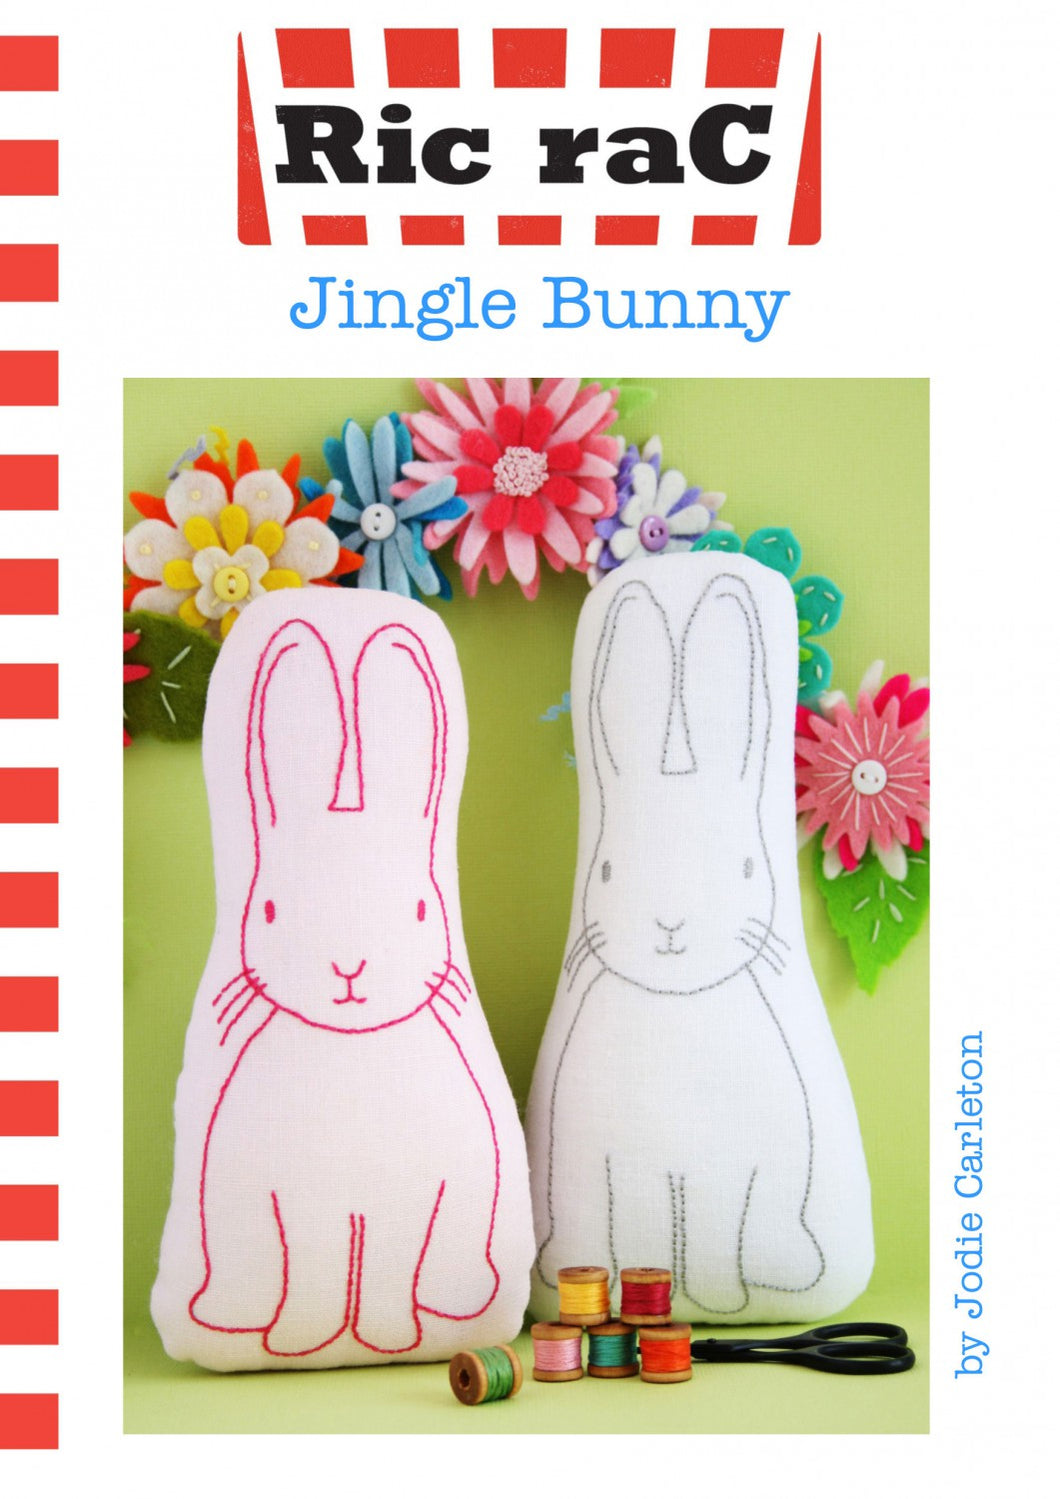 Jingle Bunny by Ric raC